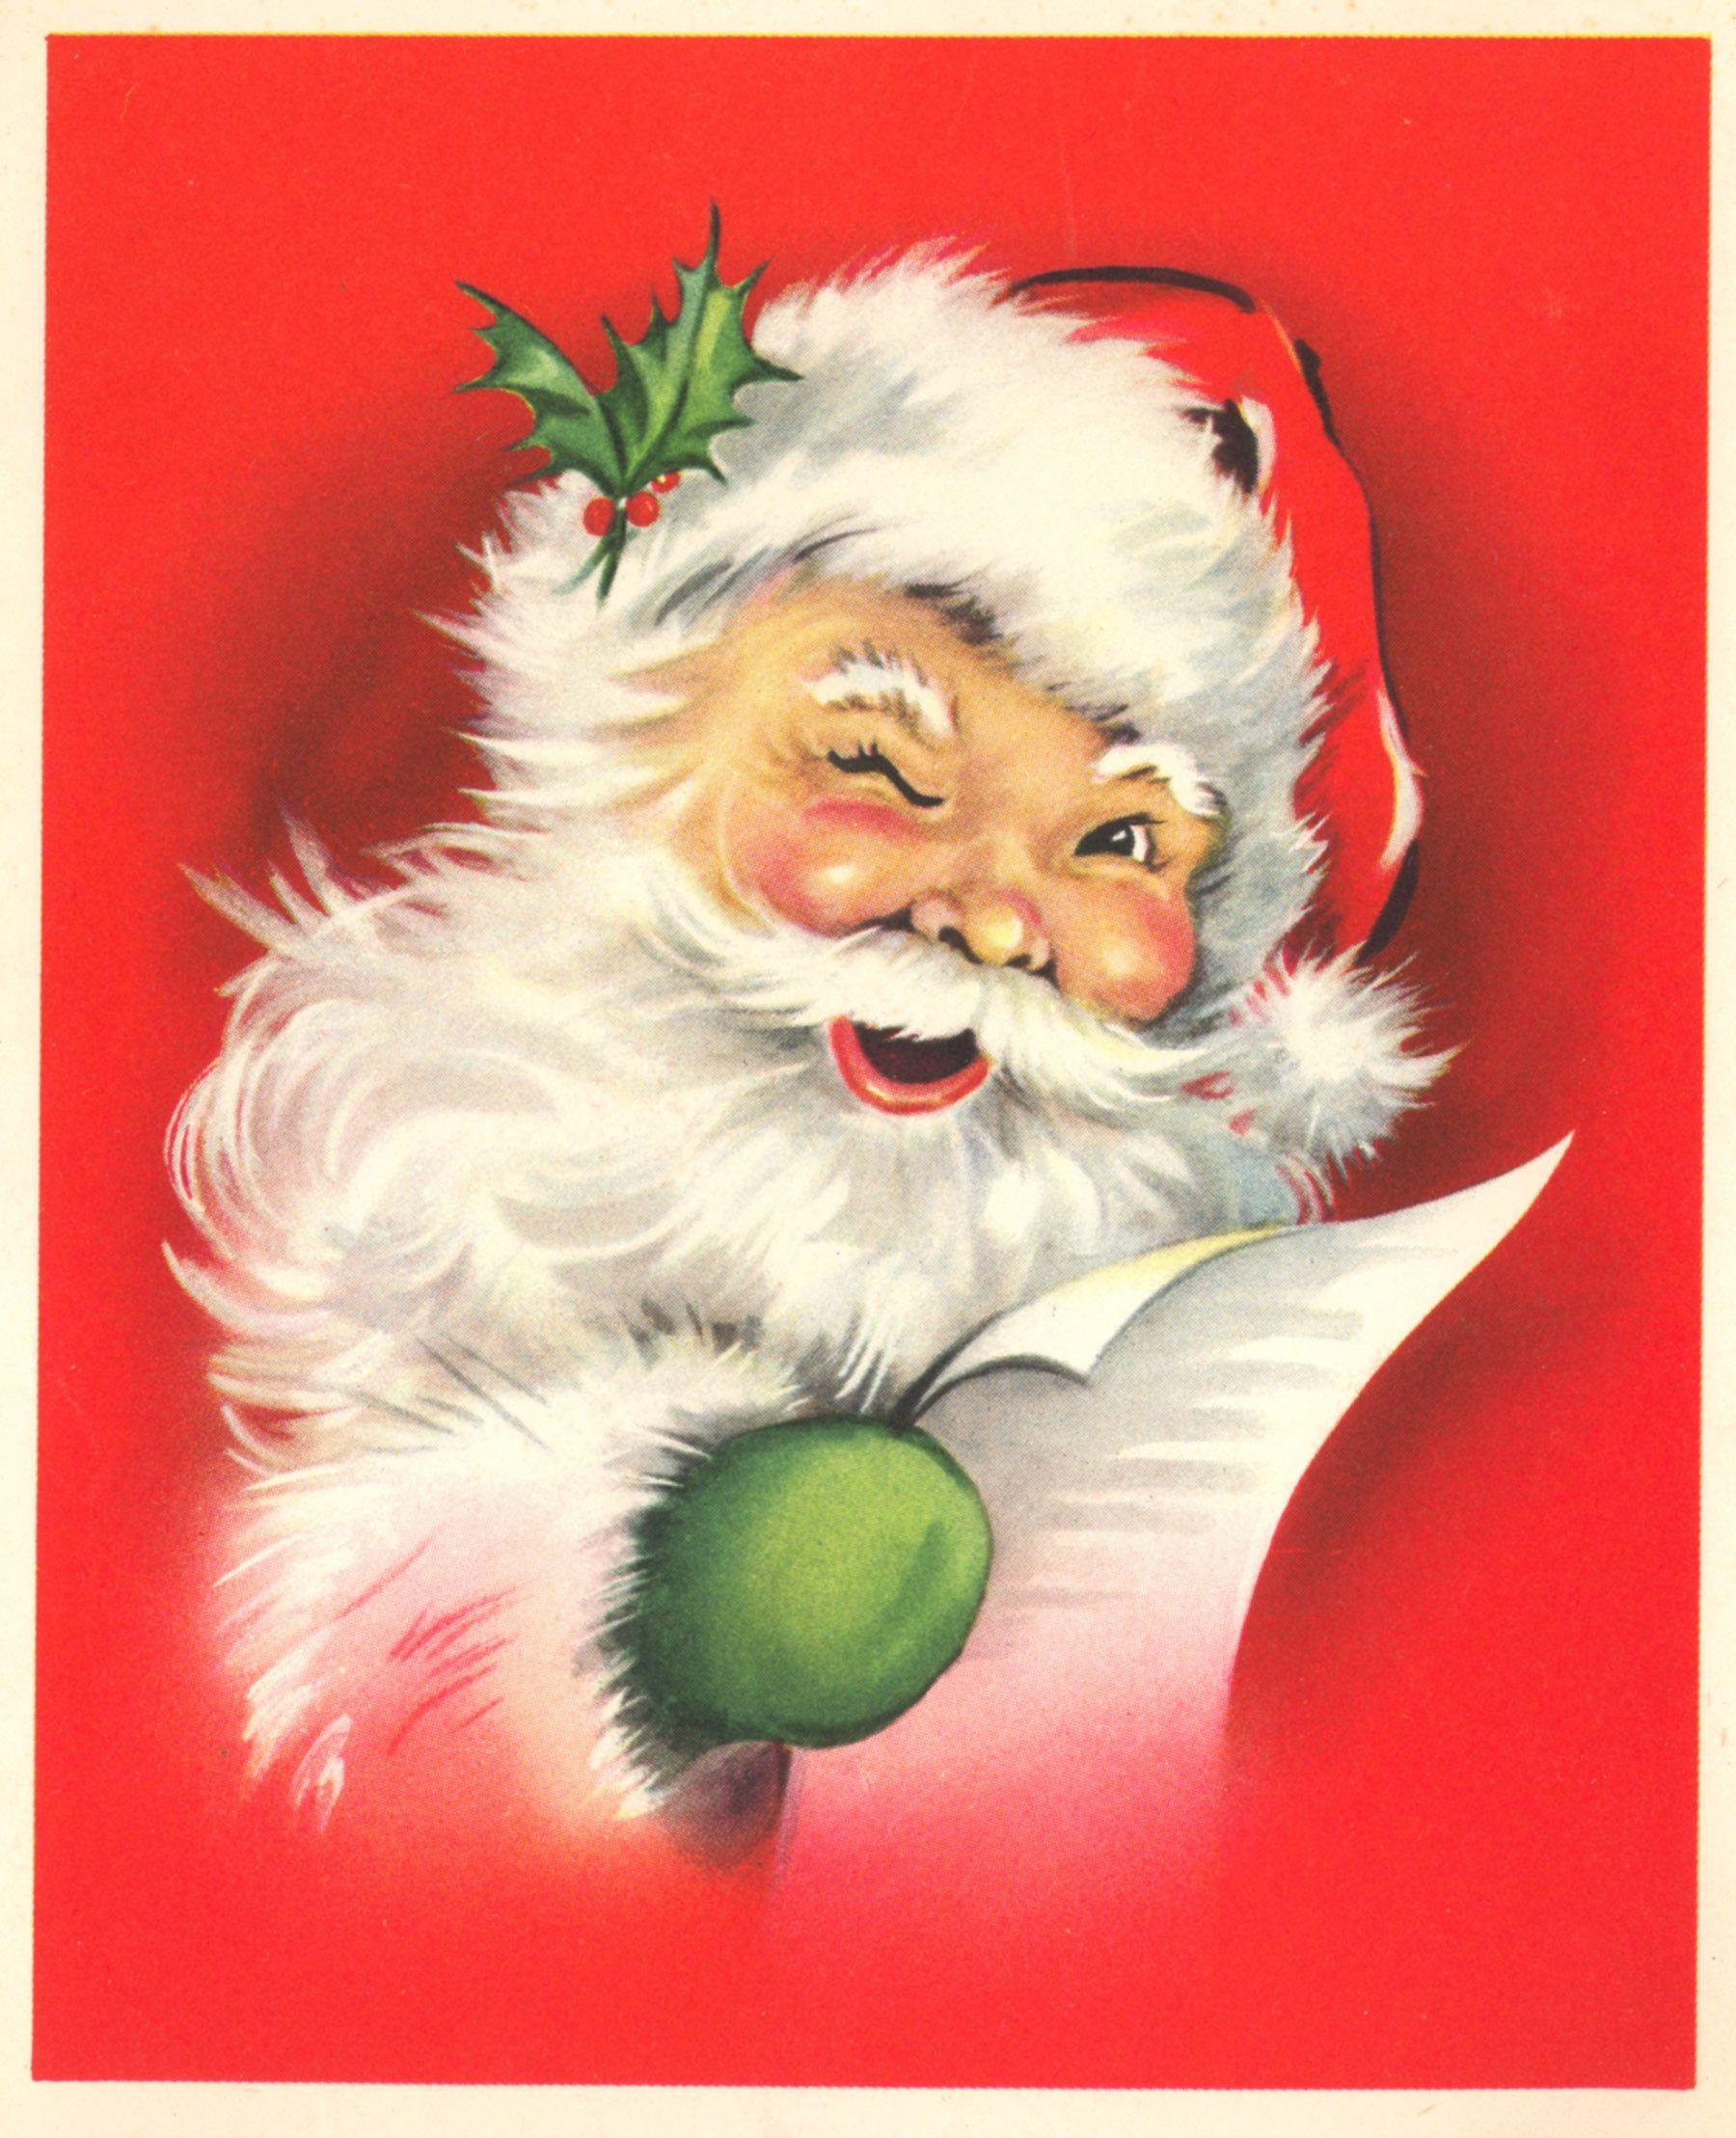 Vintage Santa Wallpapers - Top Free Vintage Santa Backgrounds ...